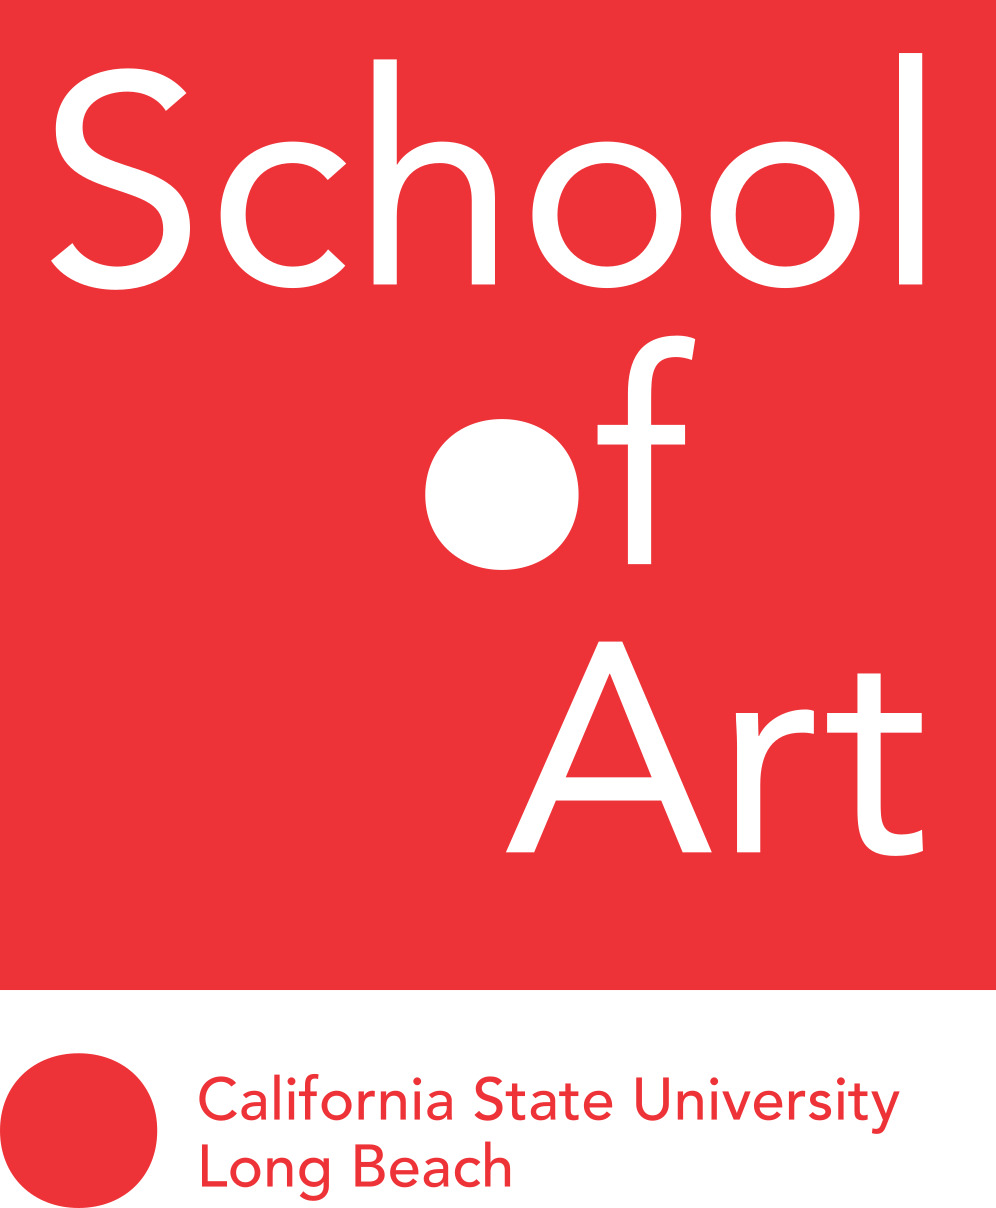 California State University, Long Beach - School of Art